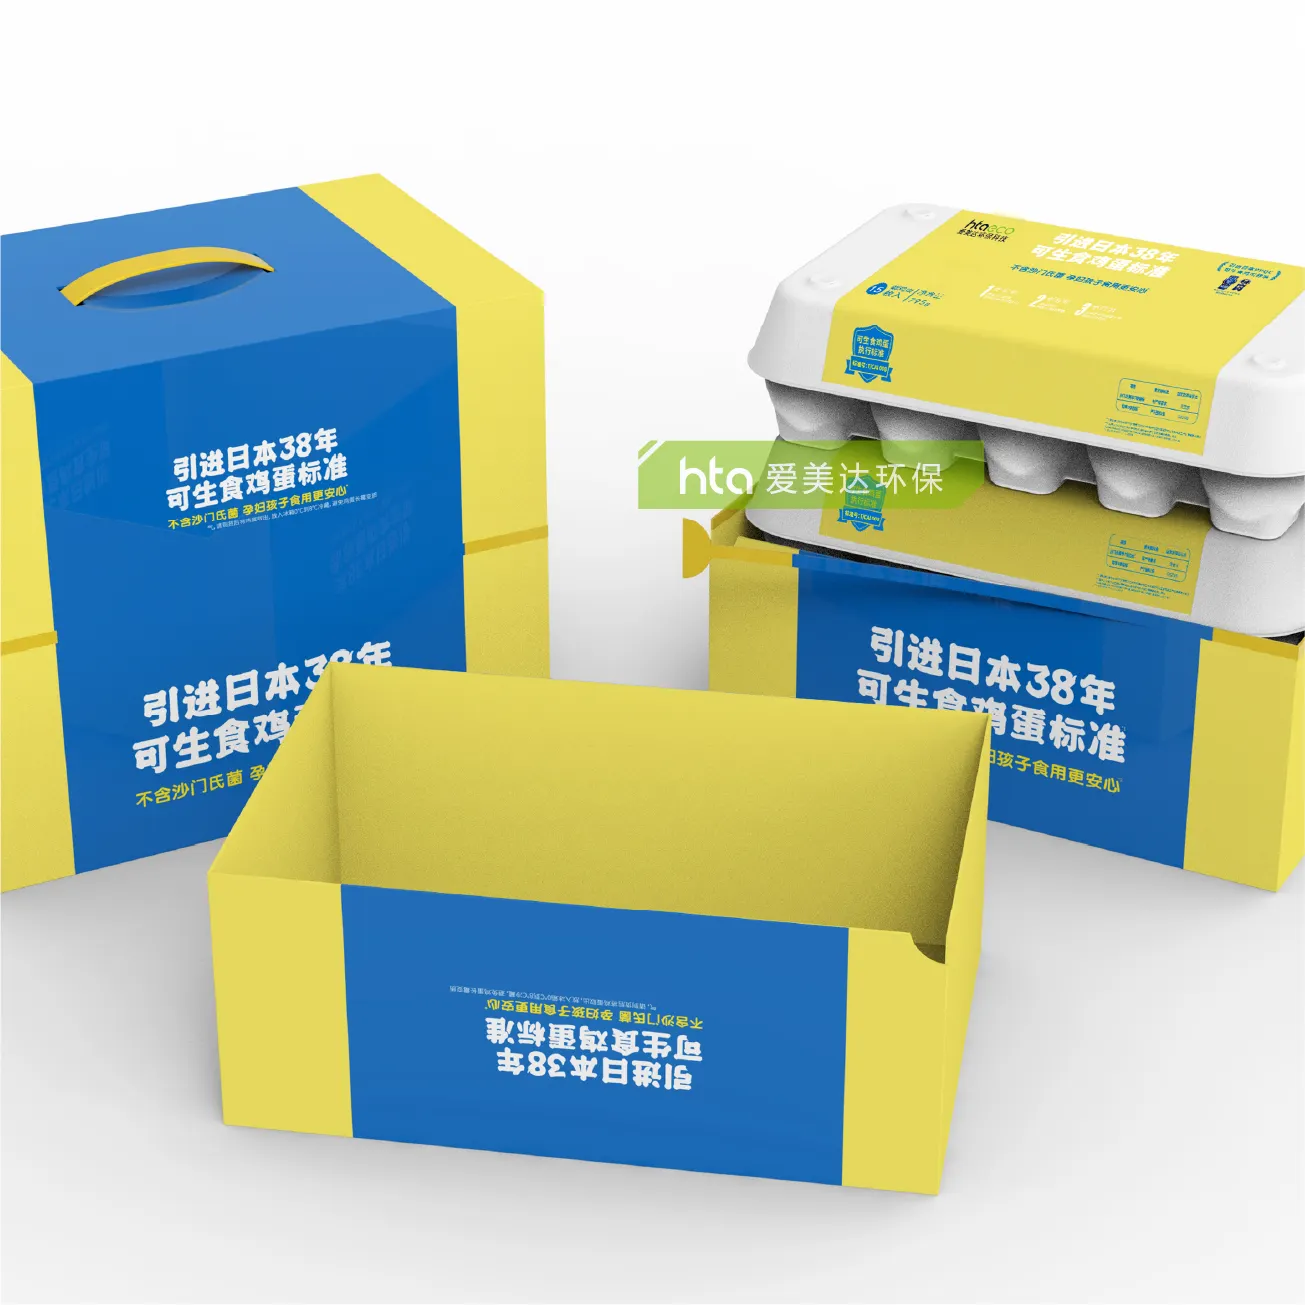 Bandejas de papel de caña de azúcar moldeadas biodegradables personalizadas, caja de cartón de pulpa de bagazo, huevos de pollo